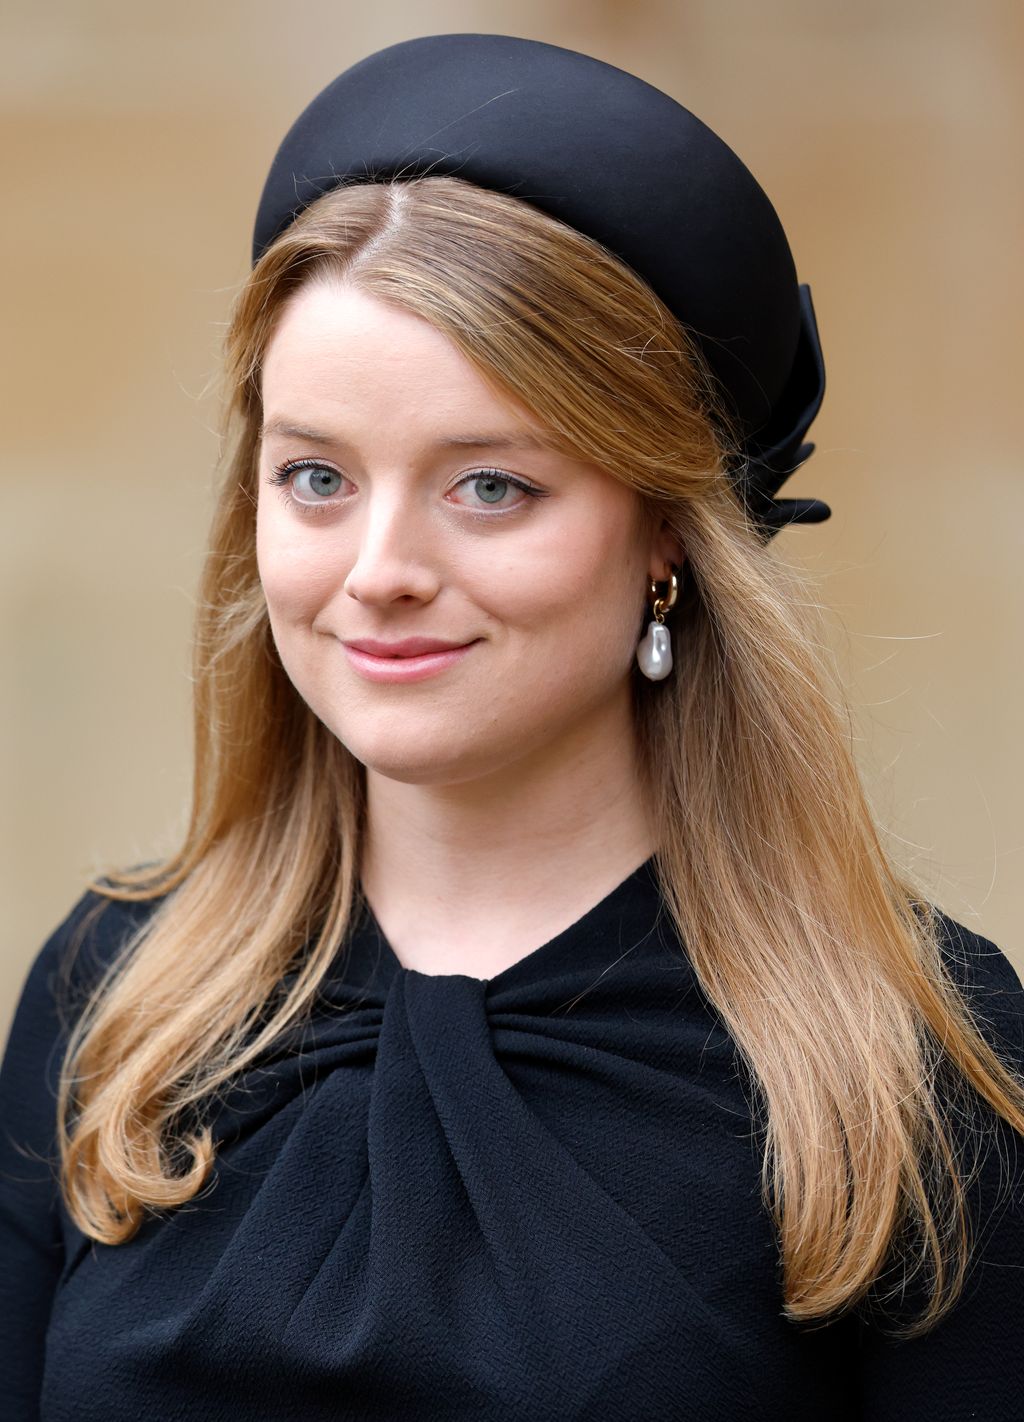 Flora Vesterberg wearing black hat 